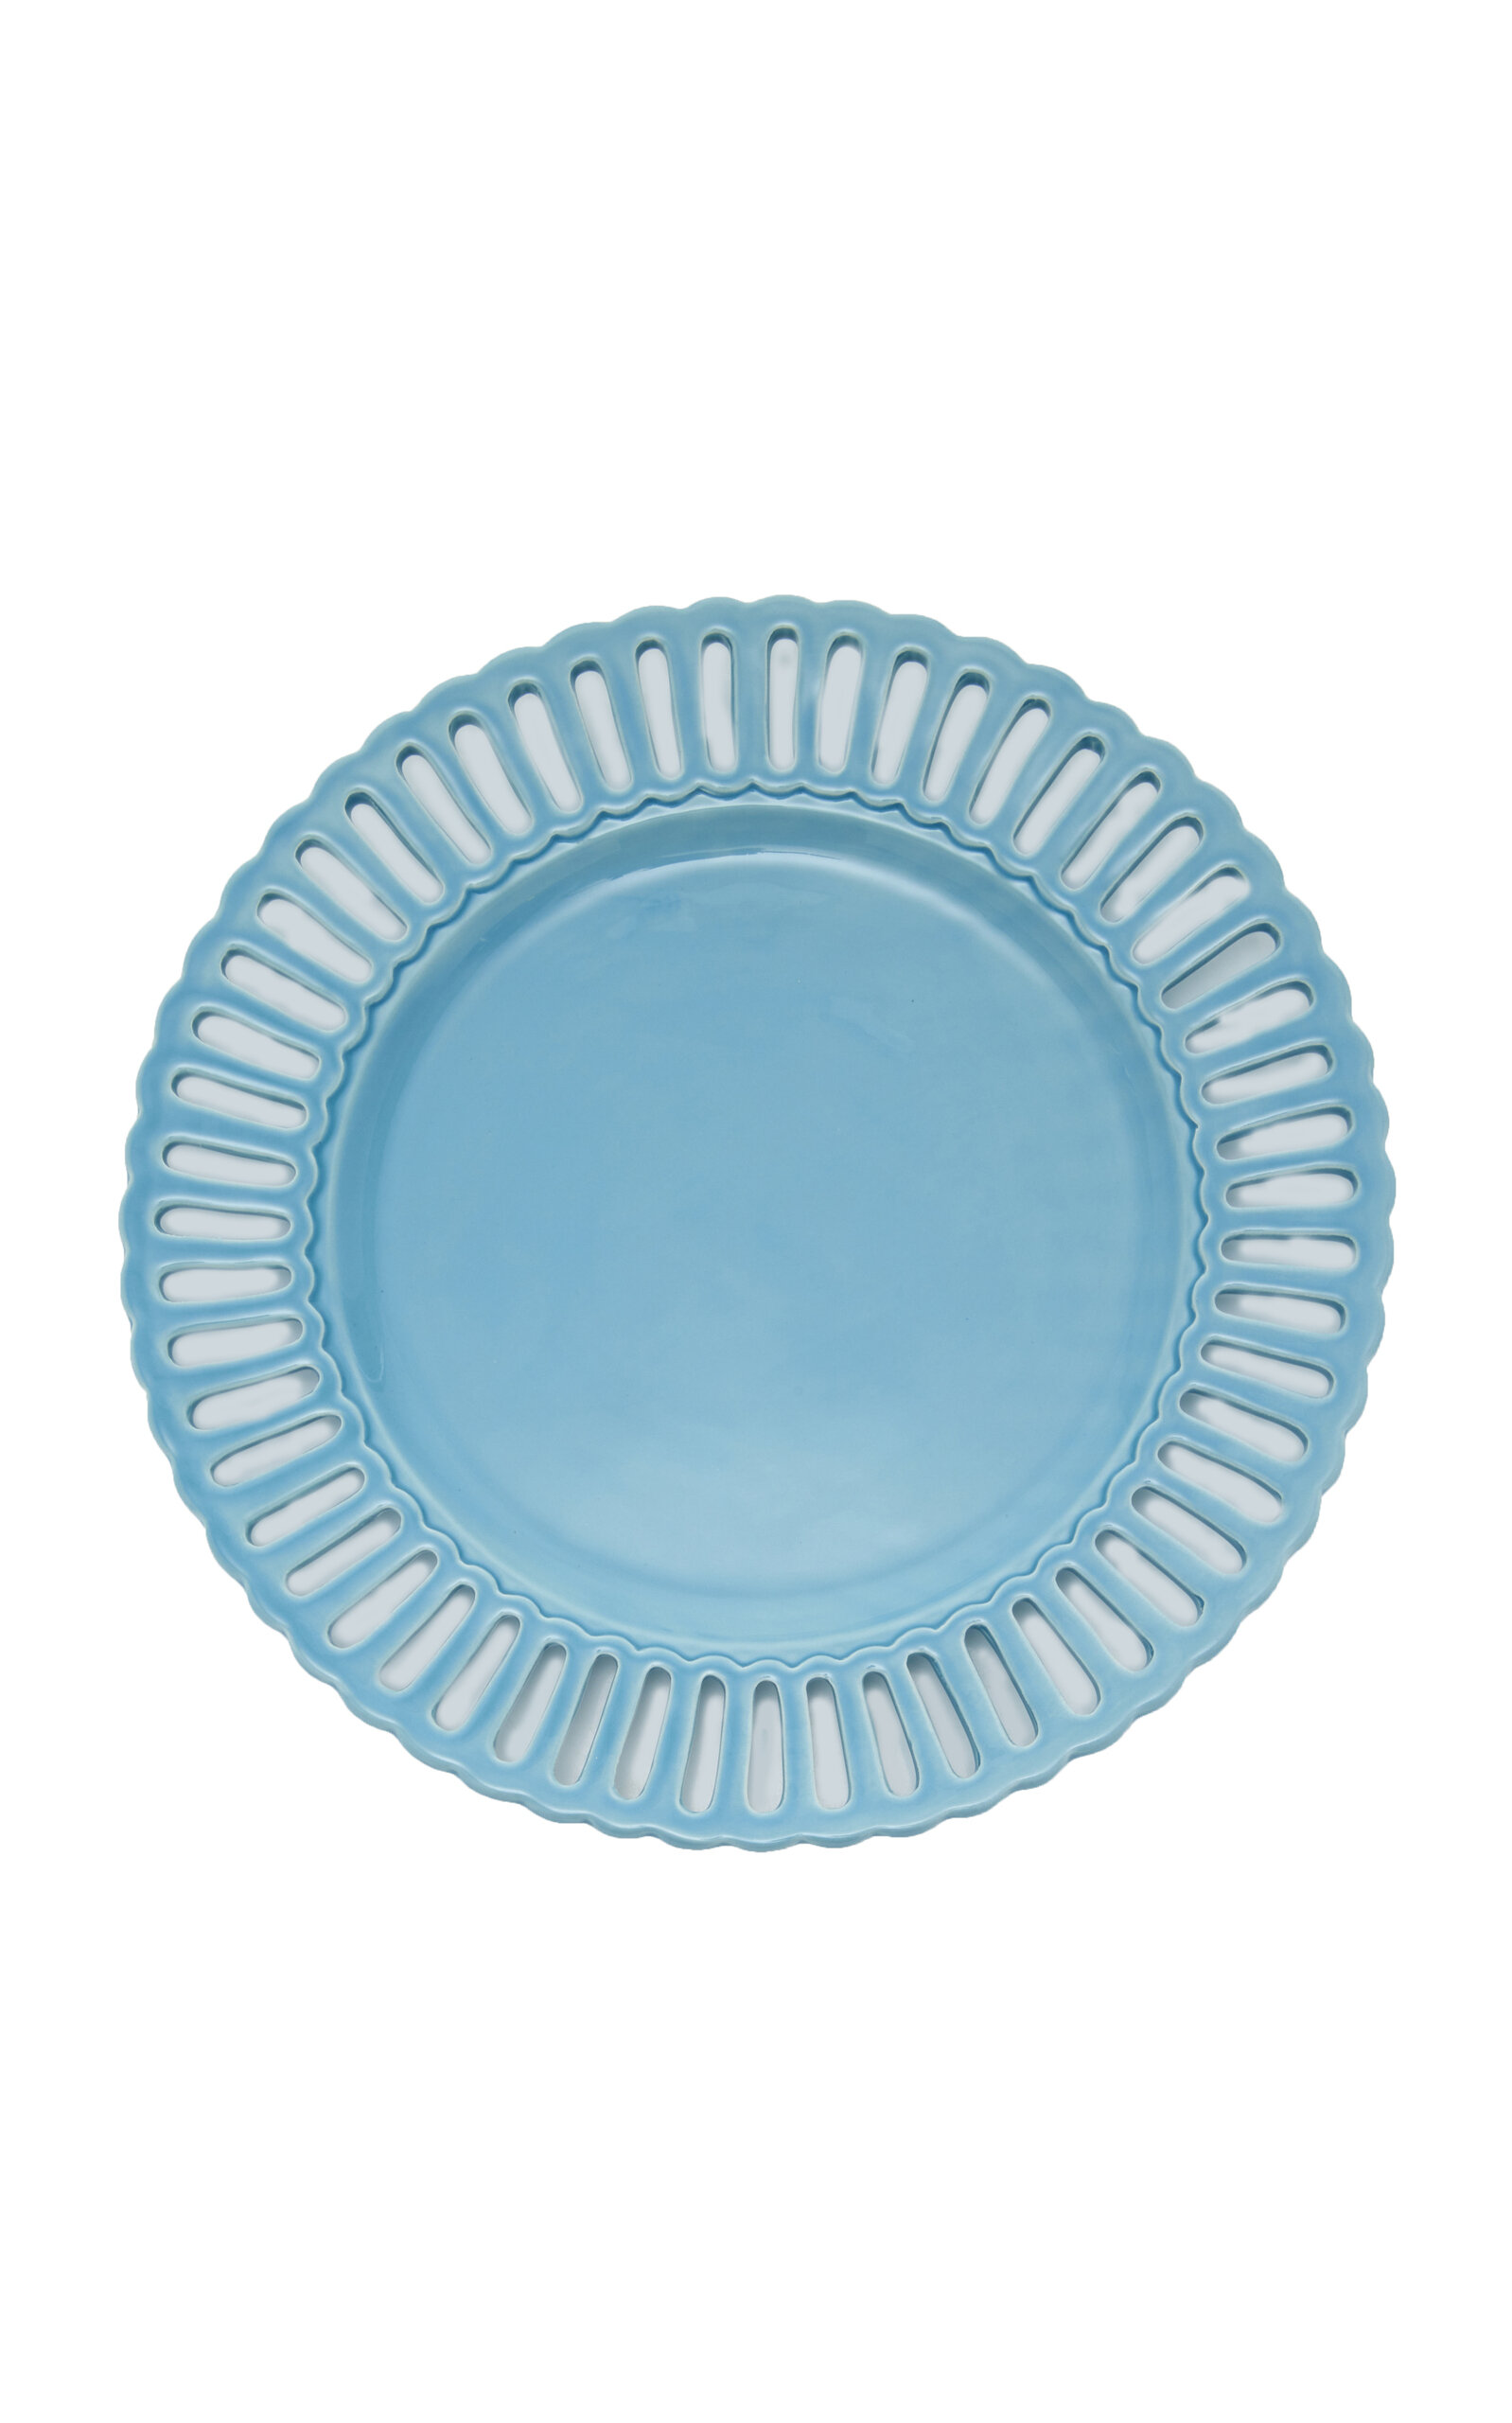 Moda Domus Balconata Creamware Charger Plate In Blue